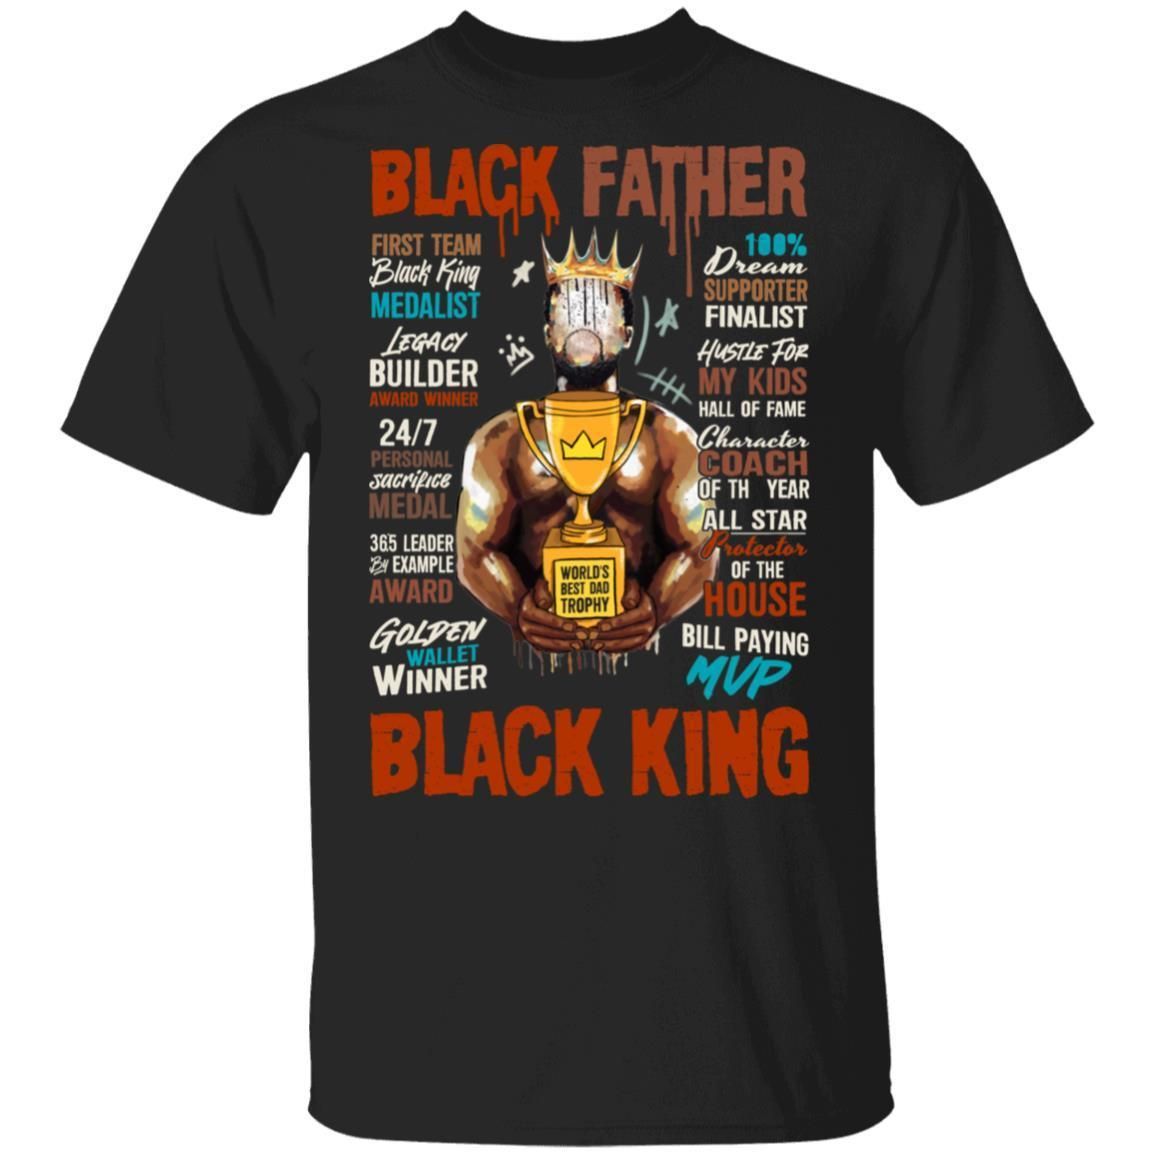 Black Father - Black King T-Shirt